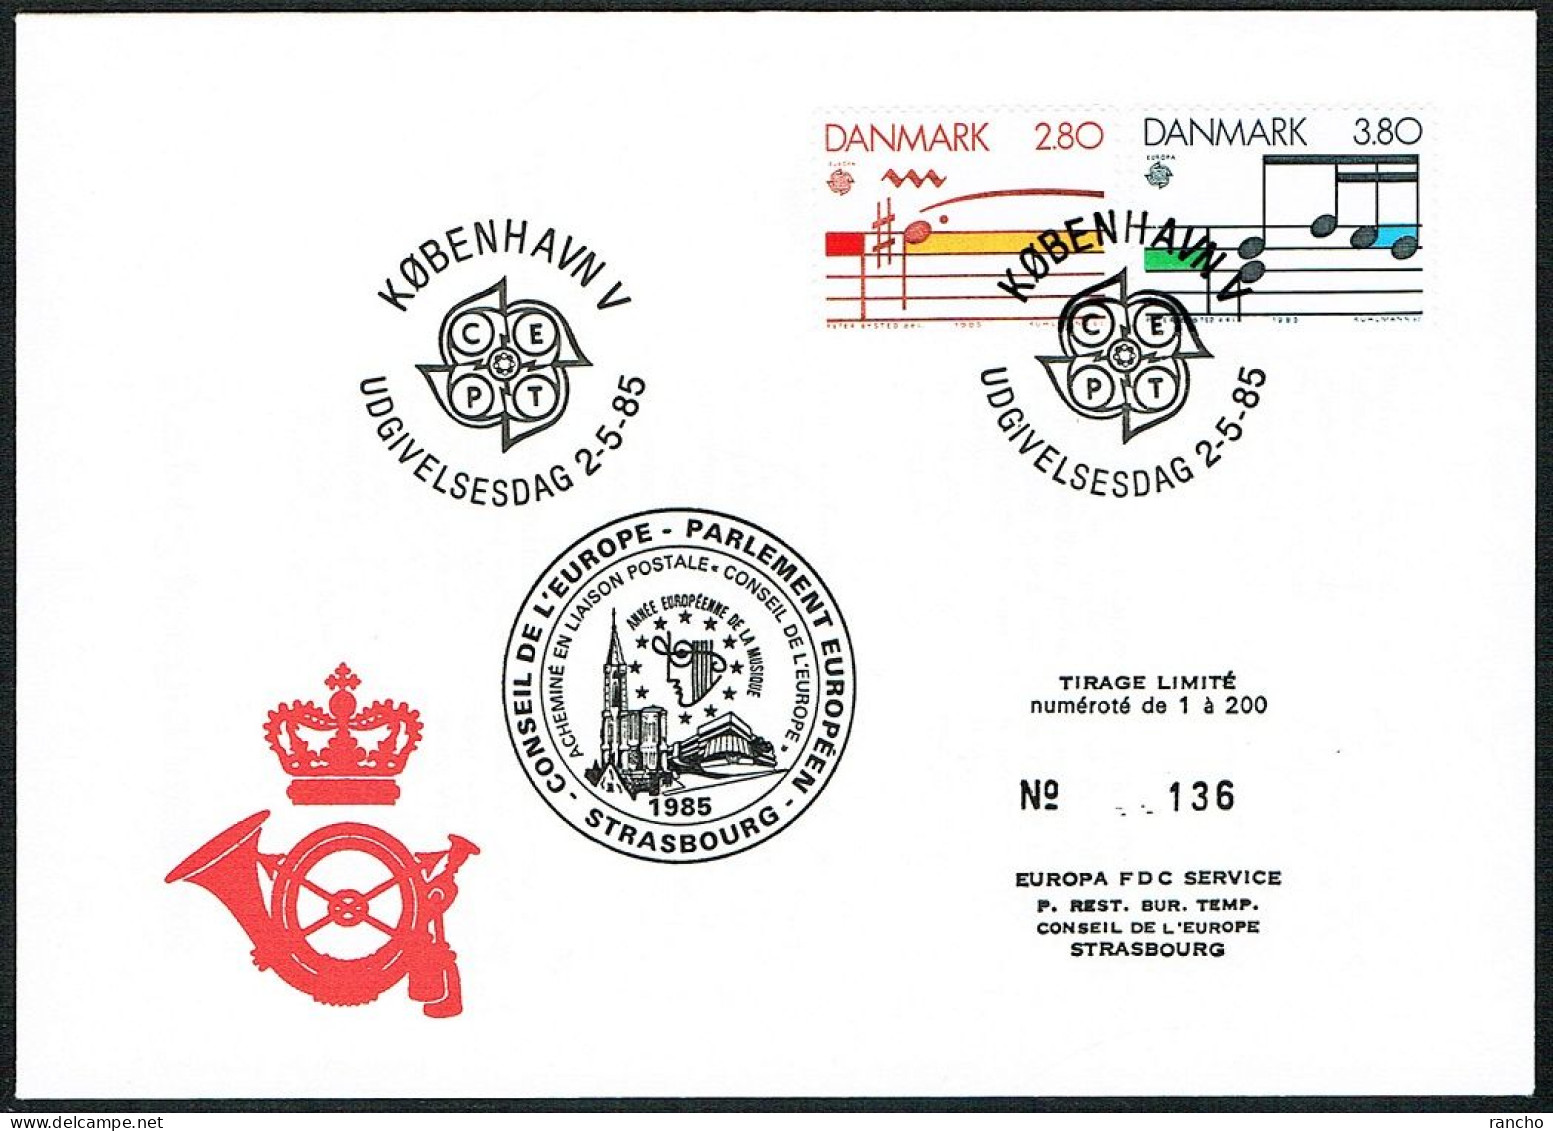 EUROPA FDC SERVICE . TIRAGE LIMITE Nr:136. DU CONSEIL DE L'EUROPE .STRASBOURG. COPENHAGUE .2.5.1985. DANMARK. - Covers & Documents